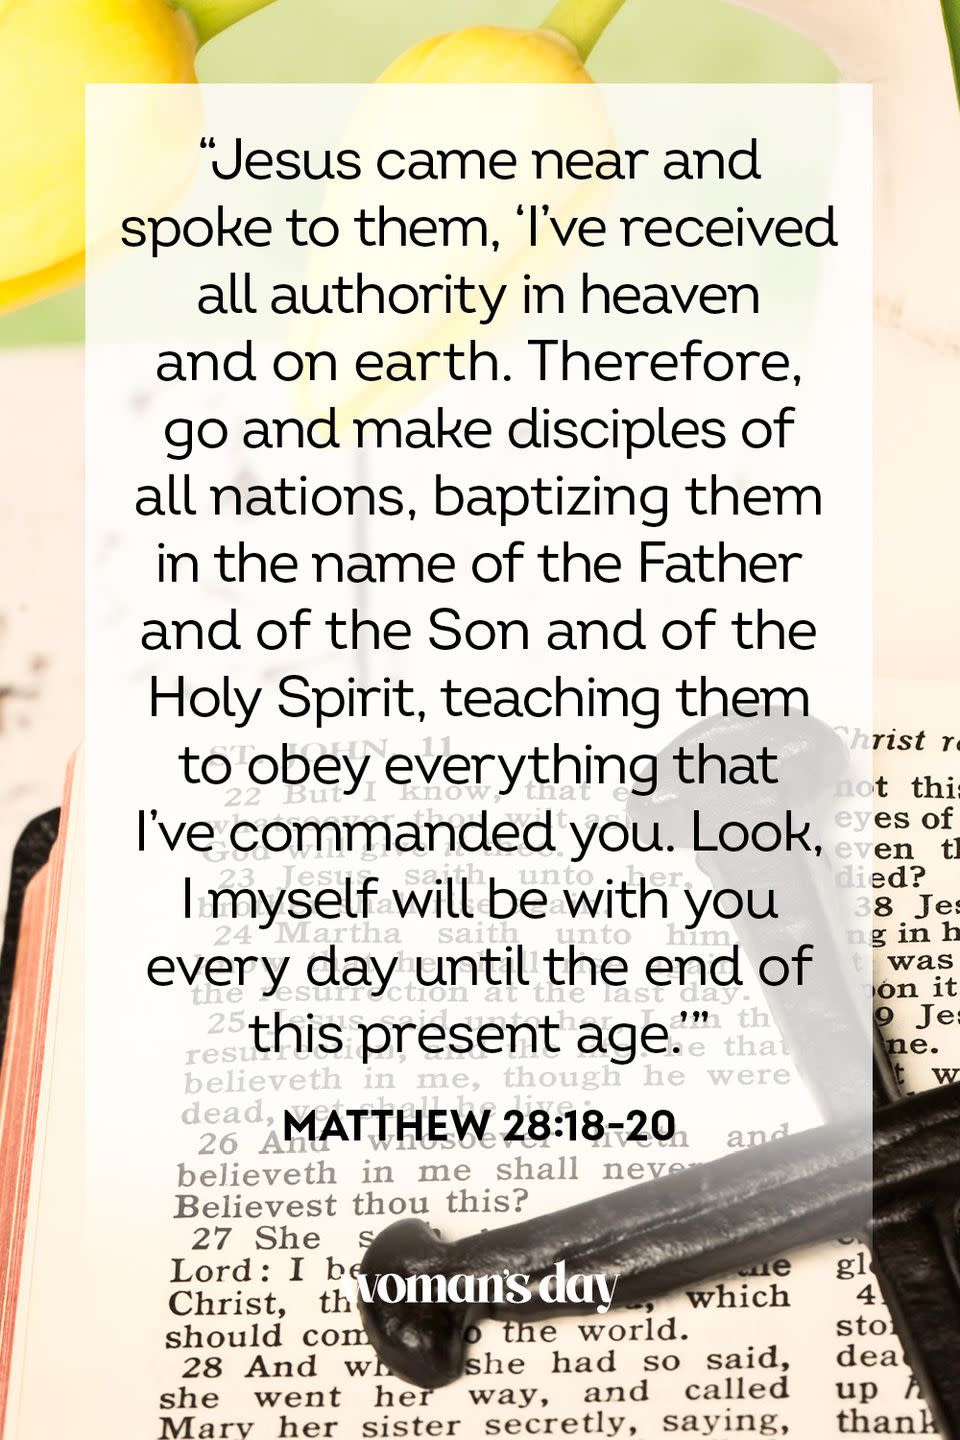 33) Matthew 28:18-20